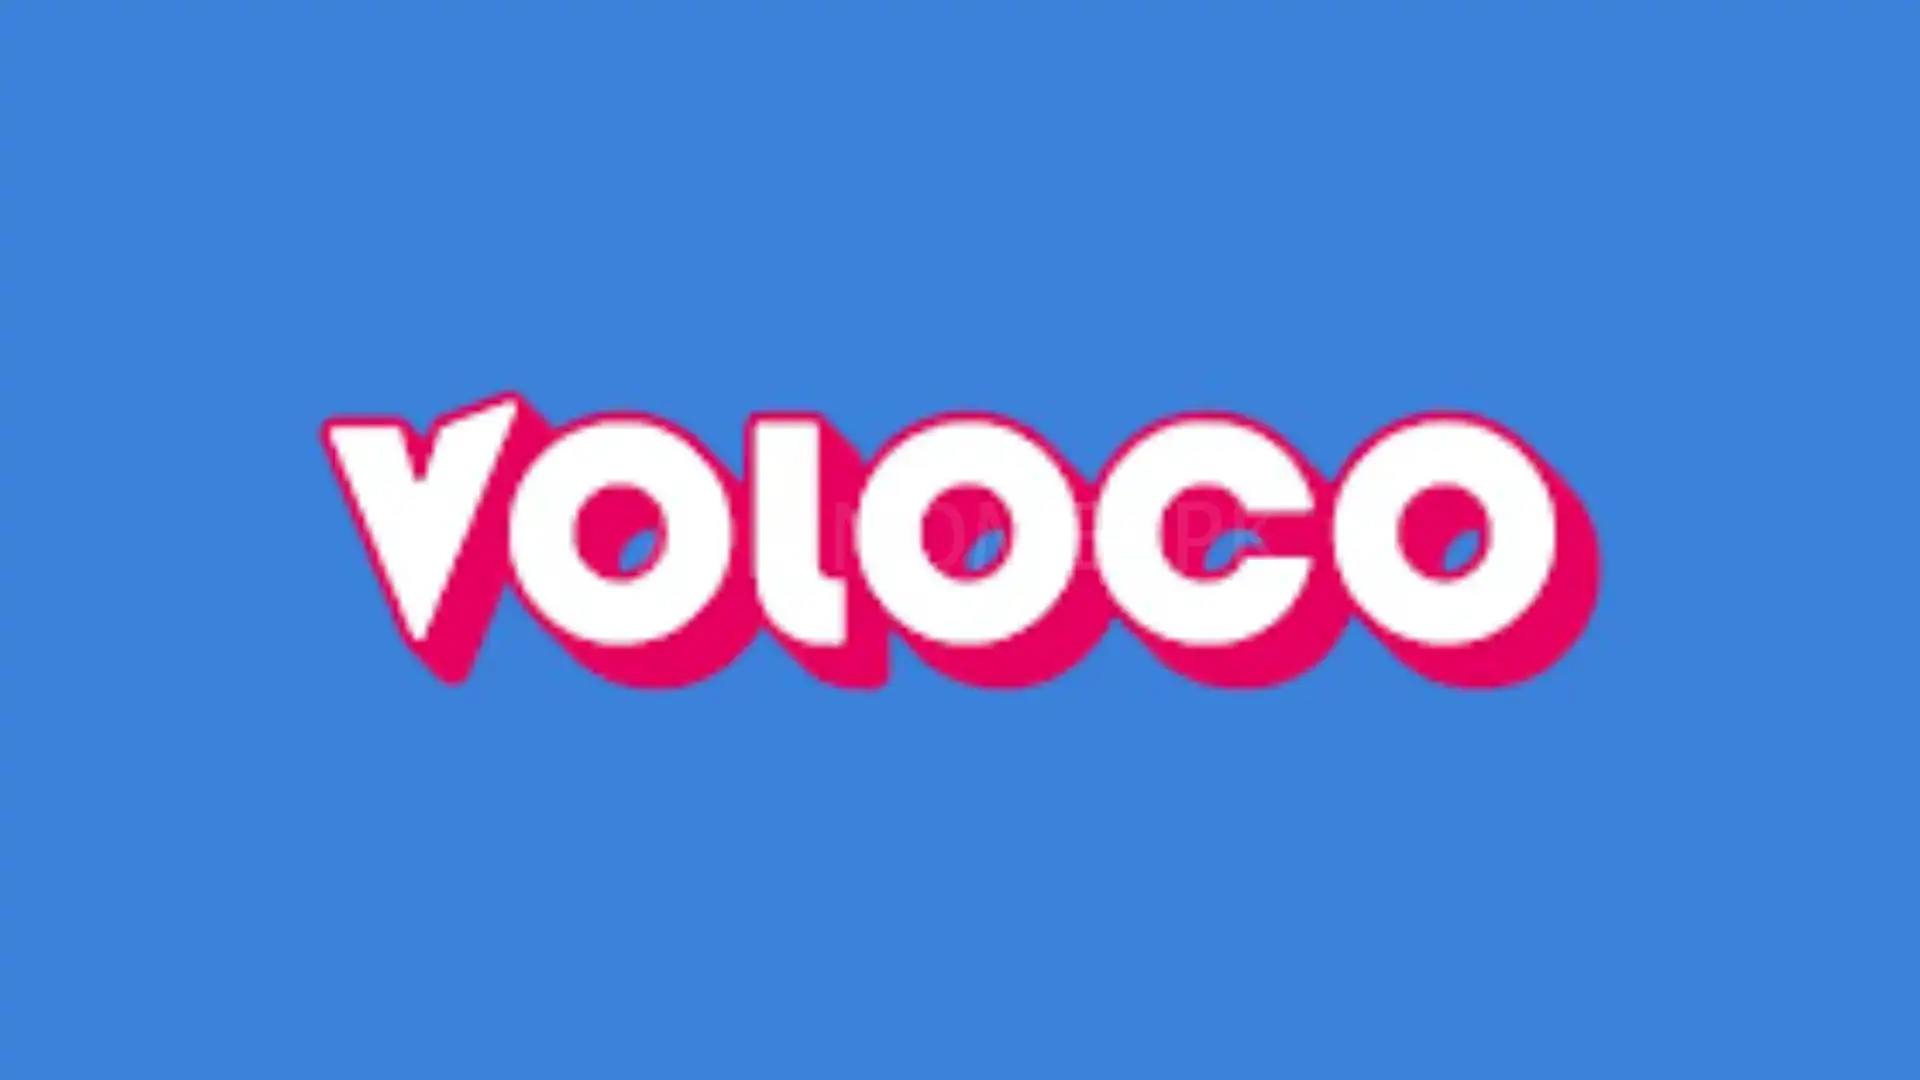 Voloco Feature Image 1